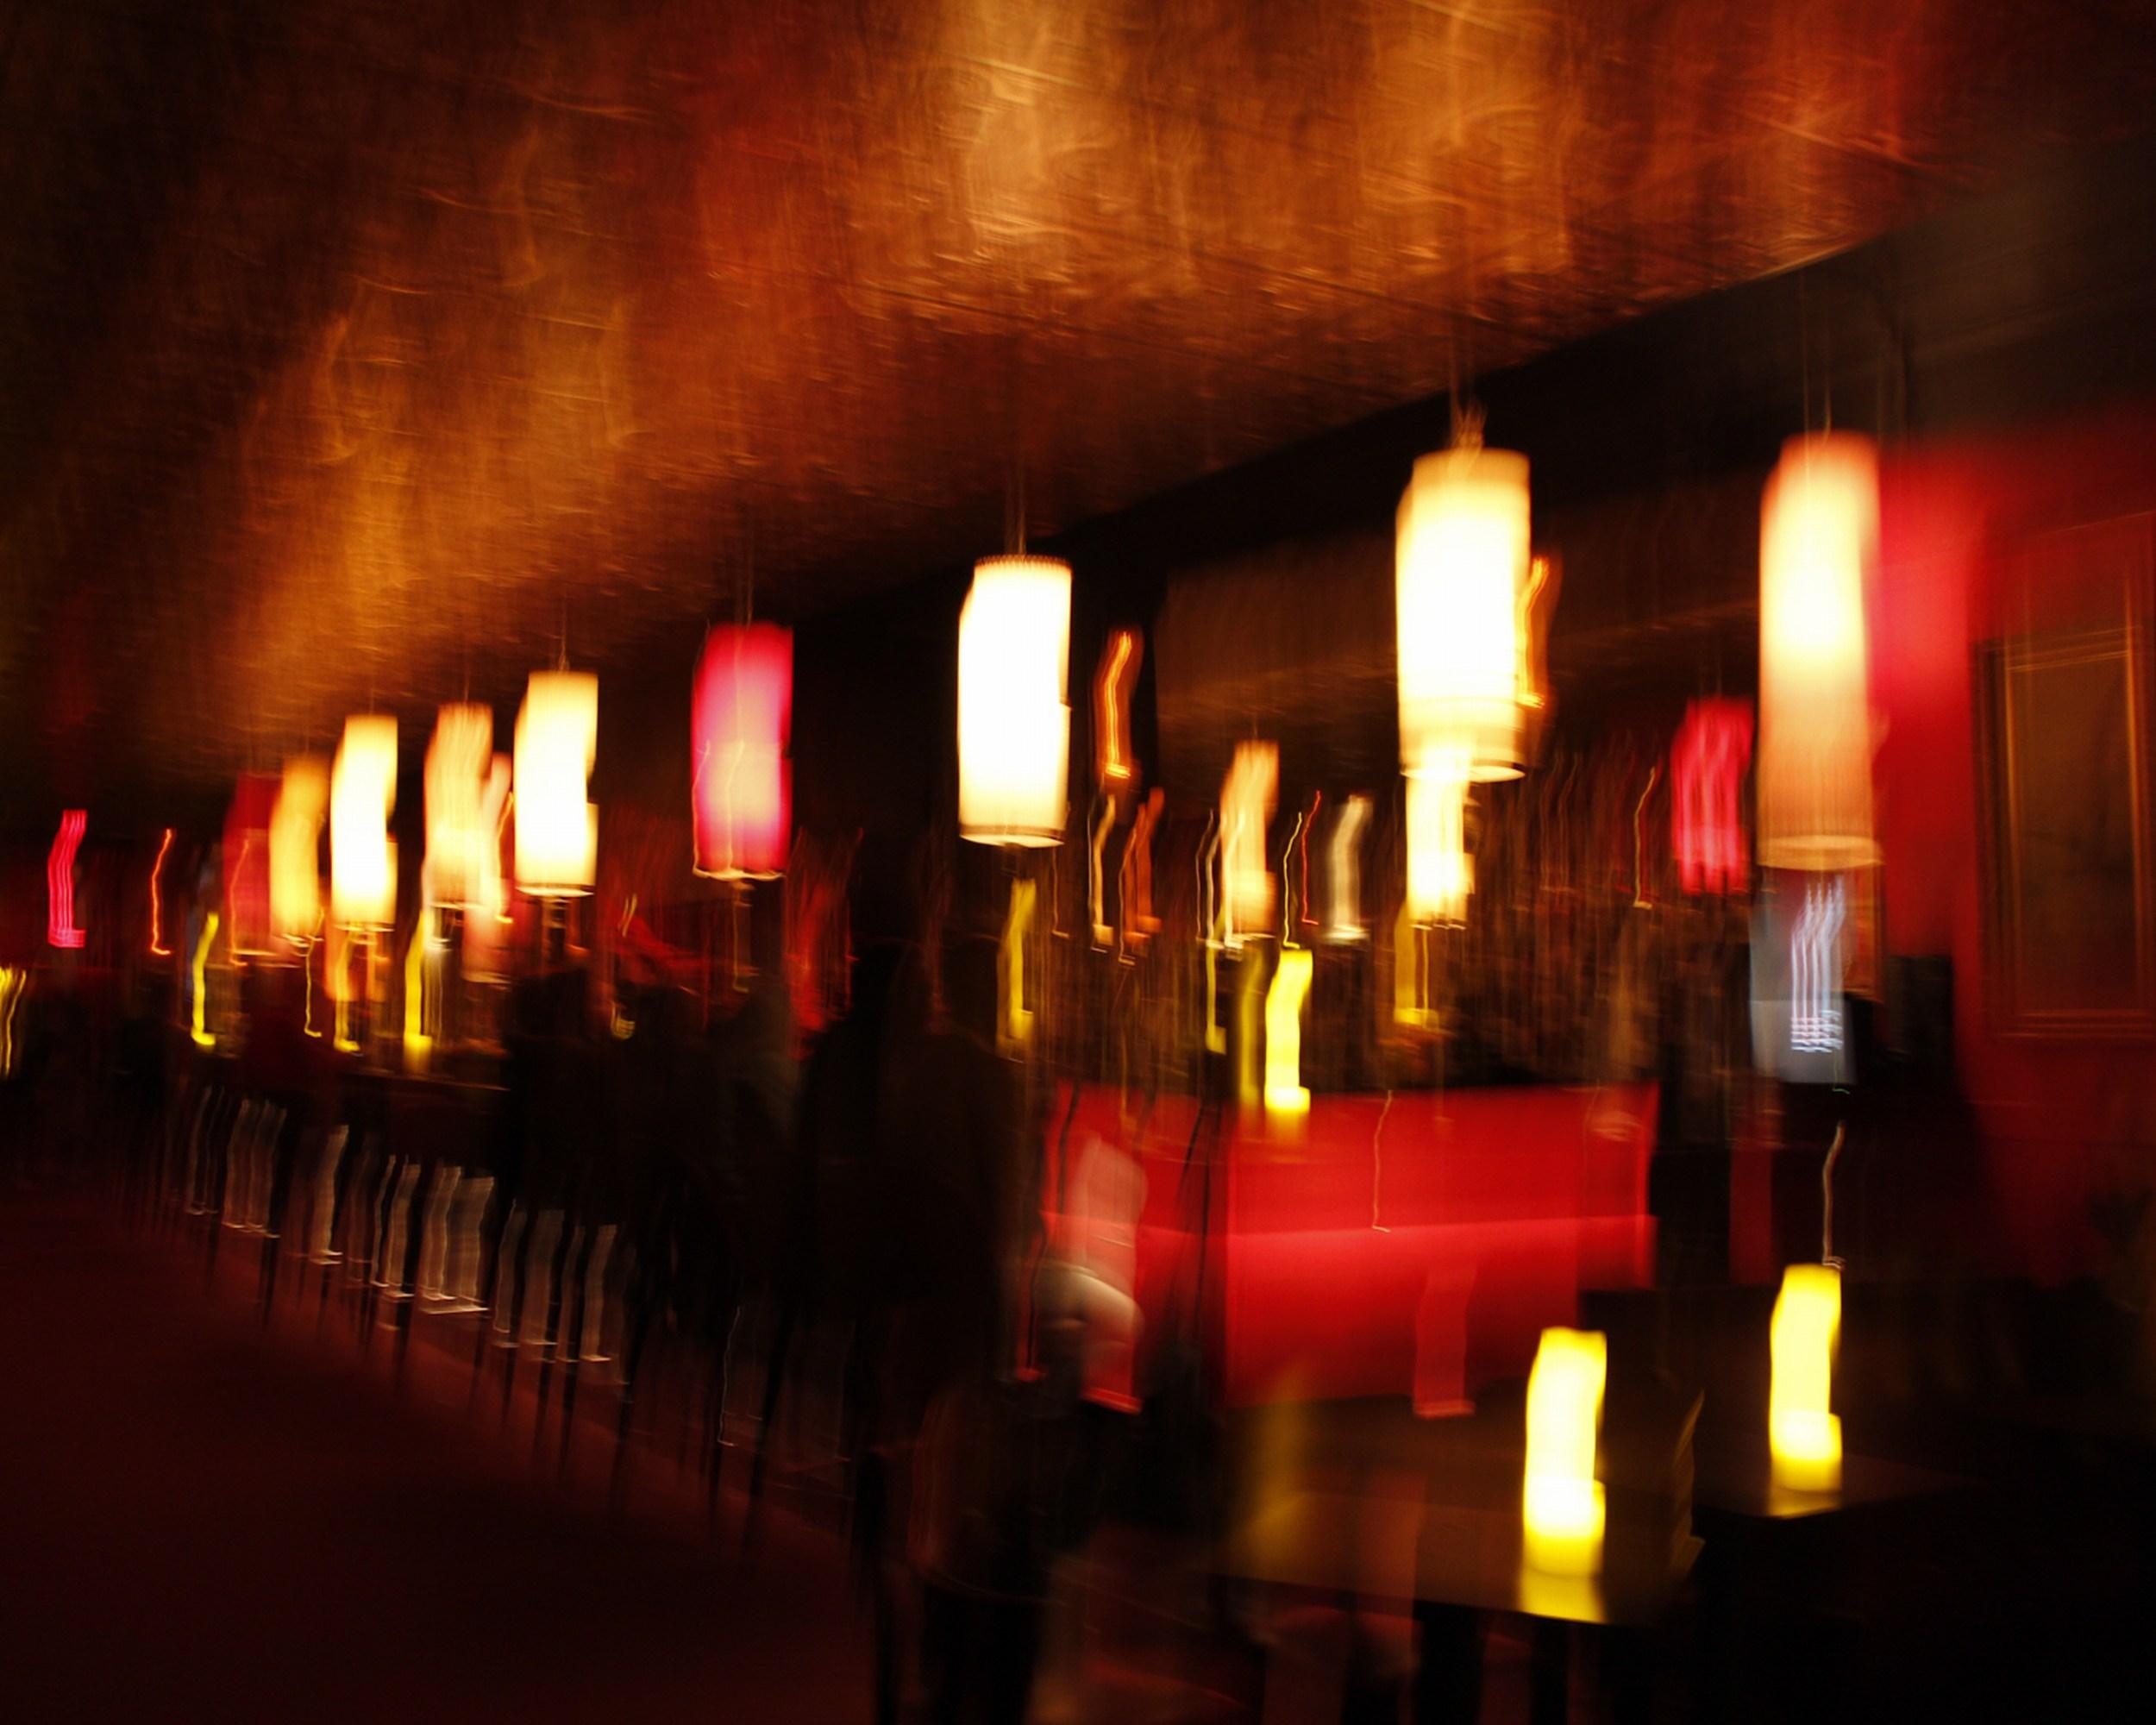 Jeffrey Tamblyn Abstract Photograph - Rhythm Bar (nightlife, retro decor, bright colors, motion blur, bar)